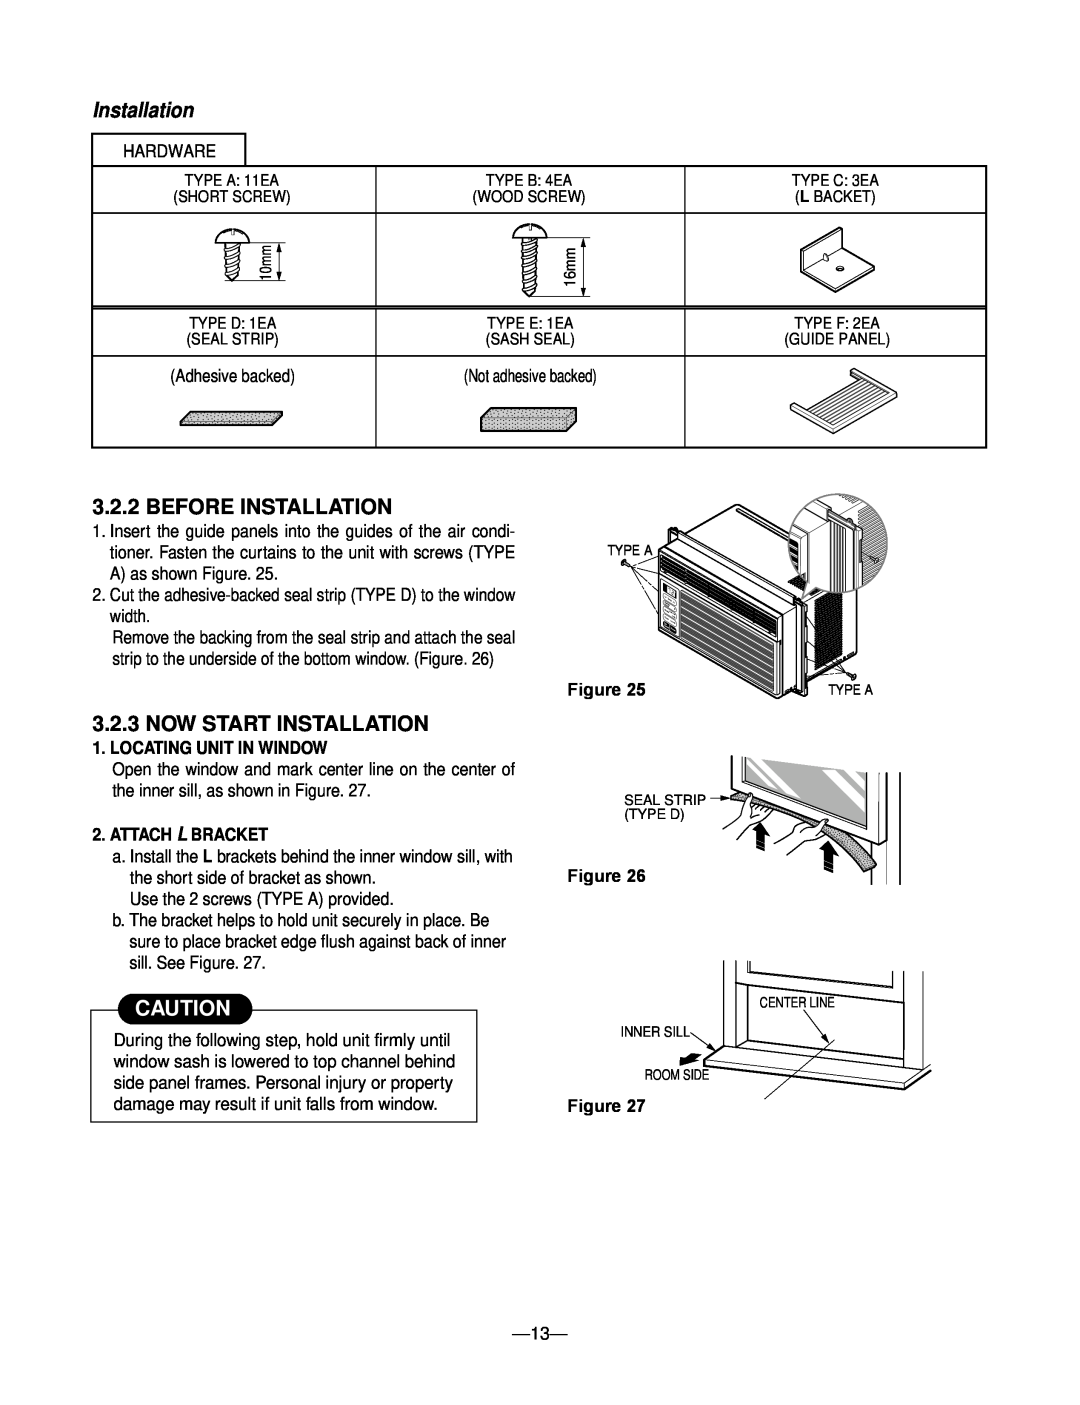 Heat Controller RADS-51B manual Before Installation, Now Start Installation, Locating Unit In Window, Attach L Bracket 